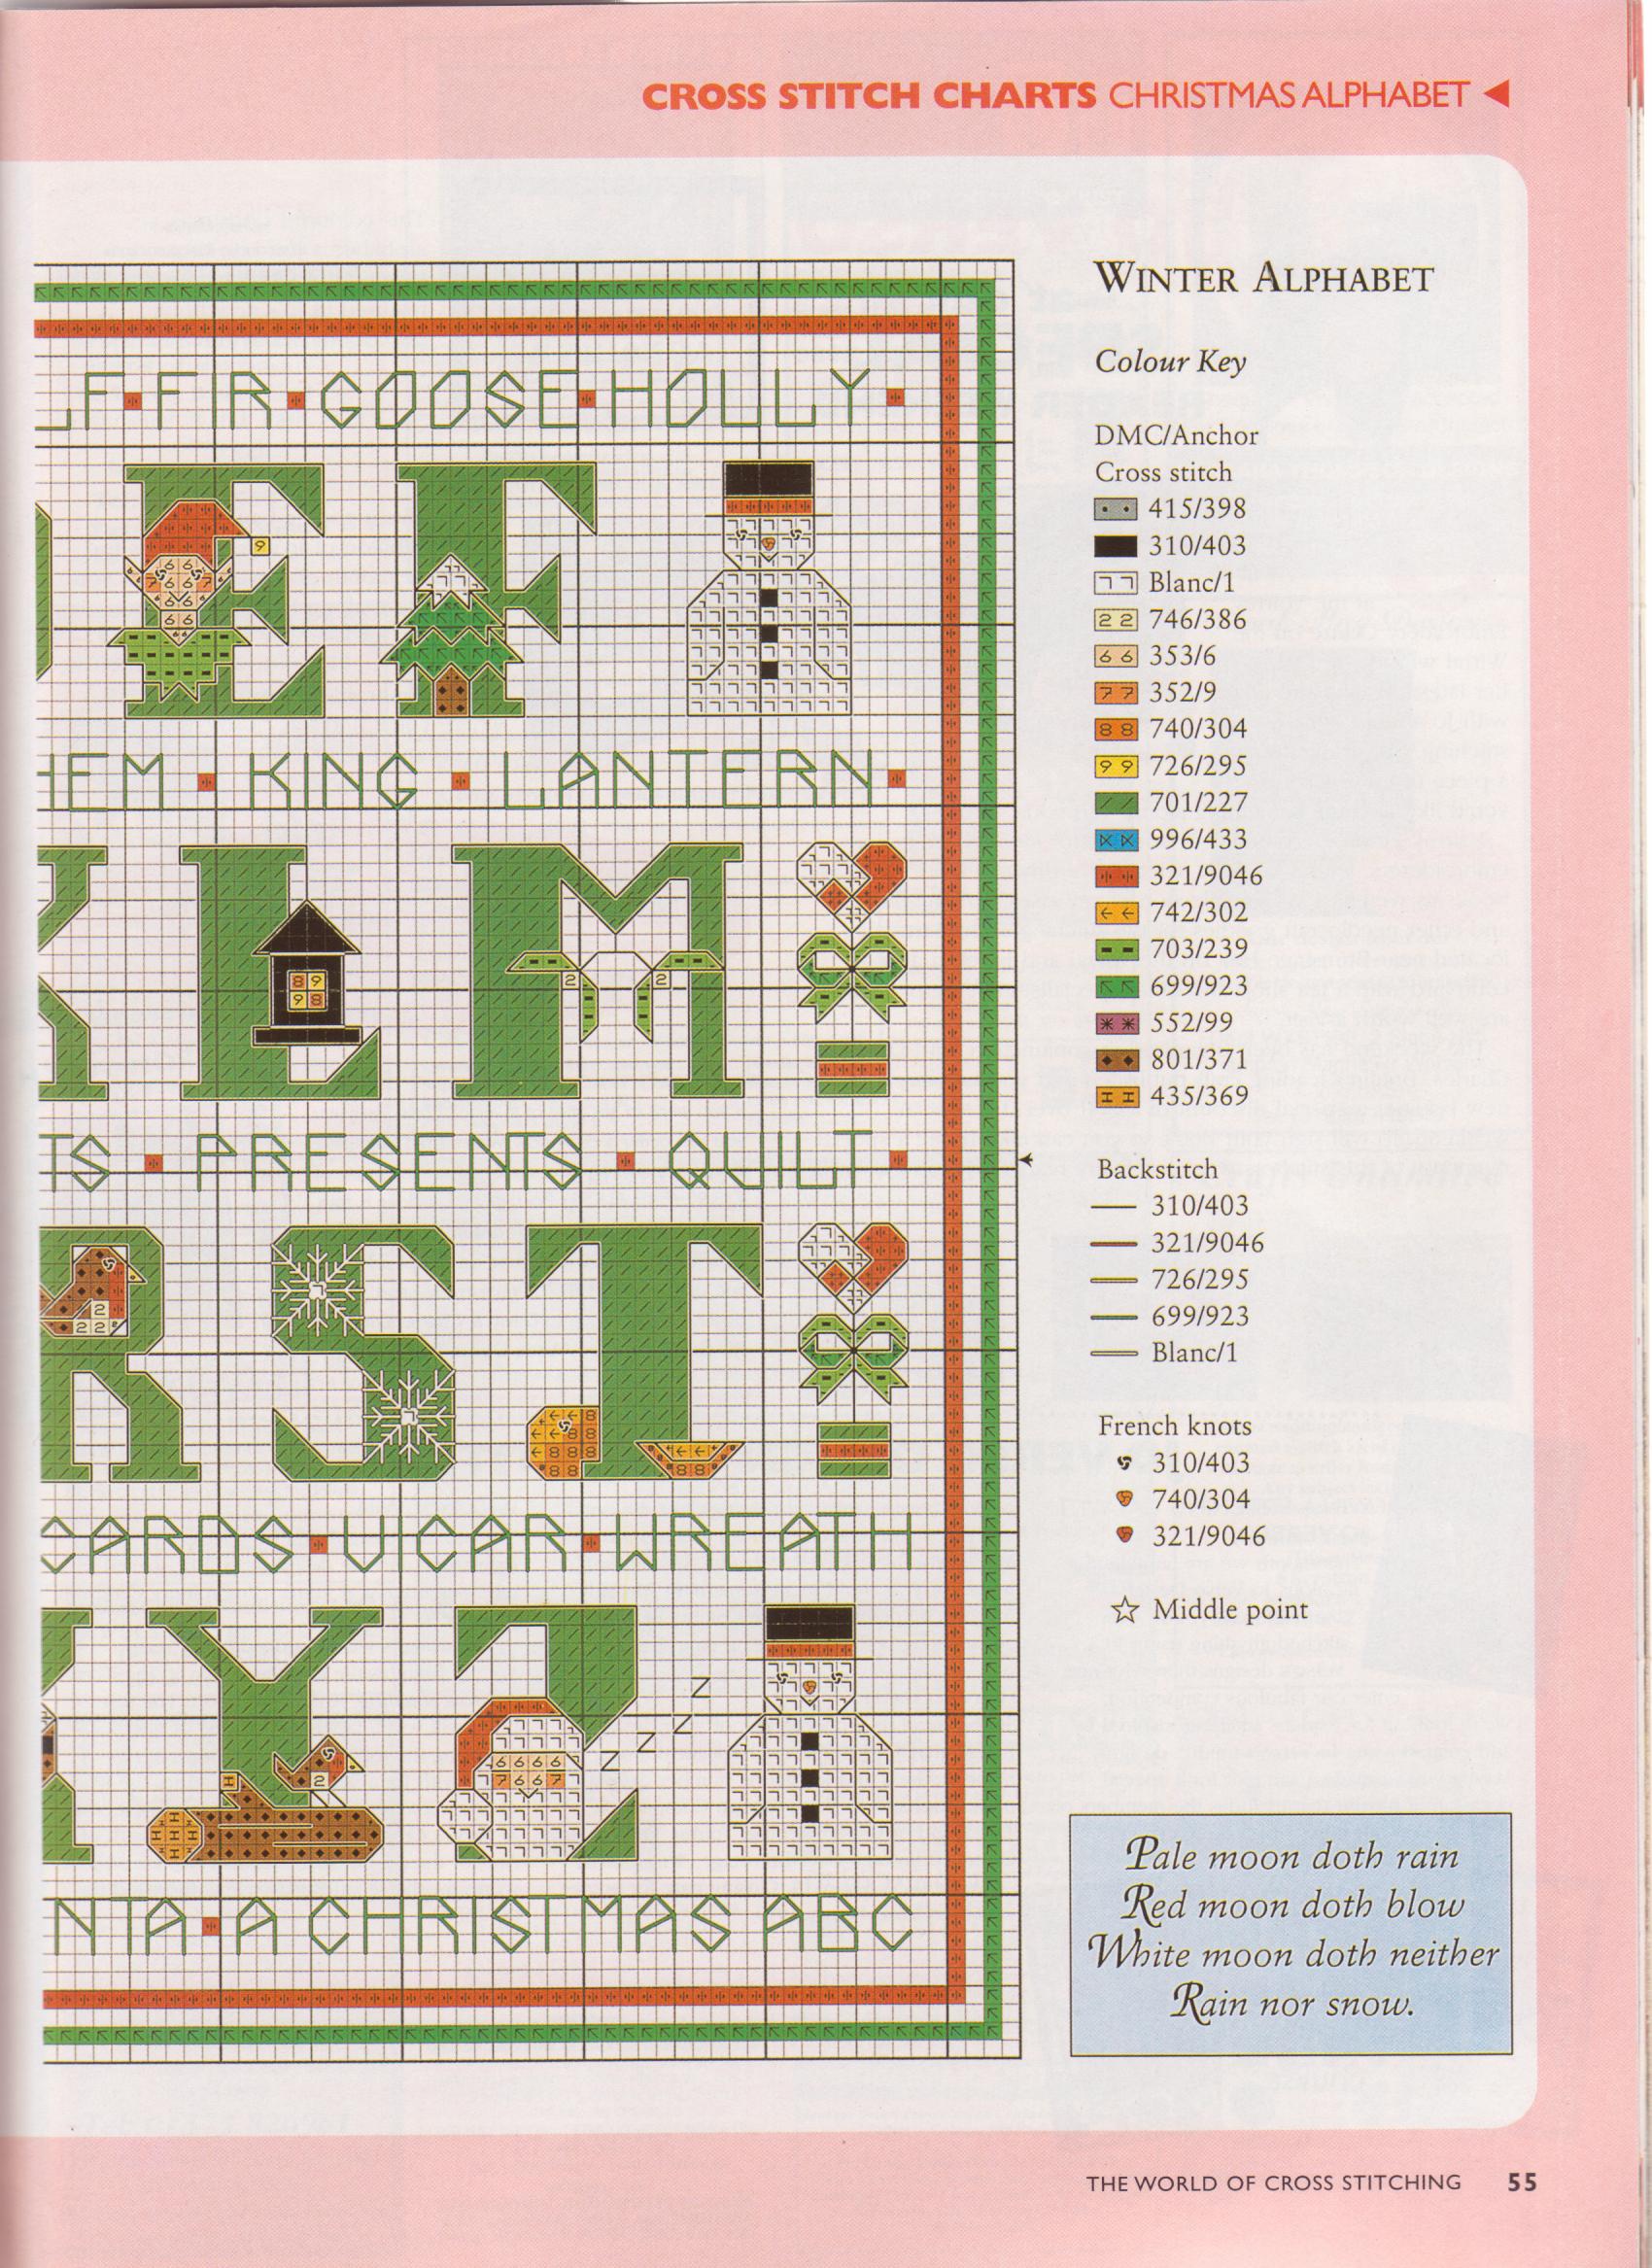 Cross stitch Christmas alphabet with Santa Claus snowmen and goblins (2)